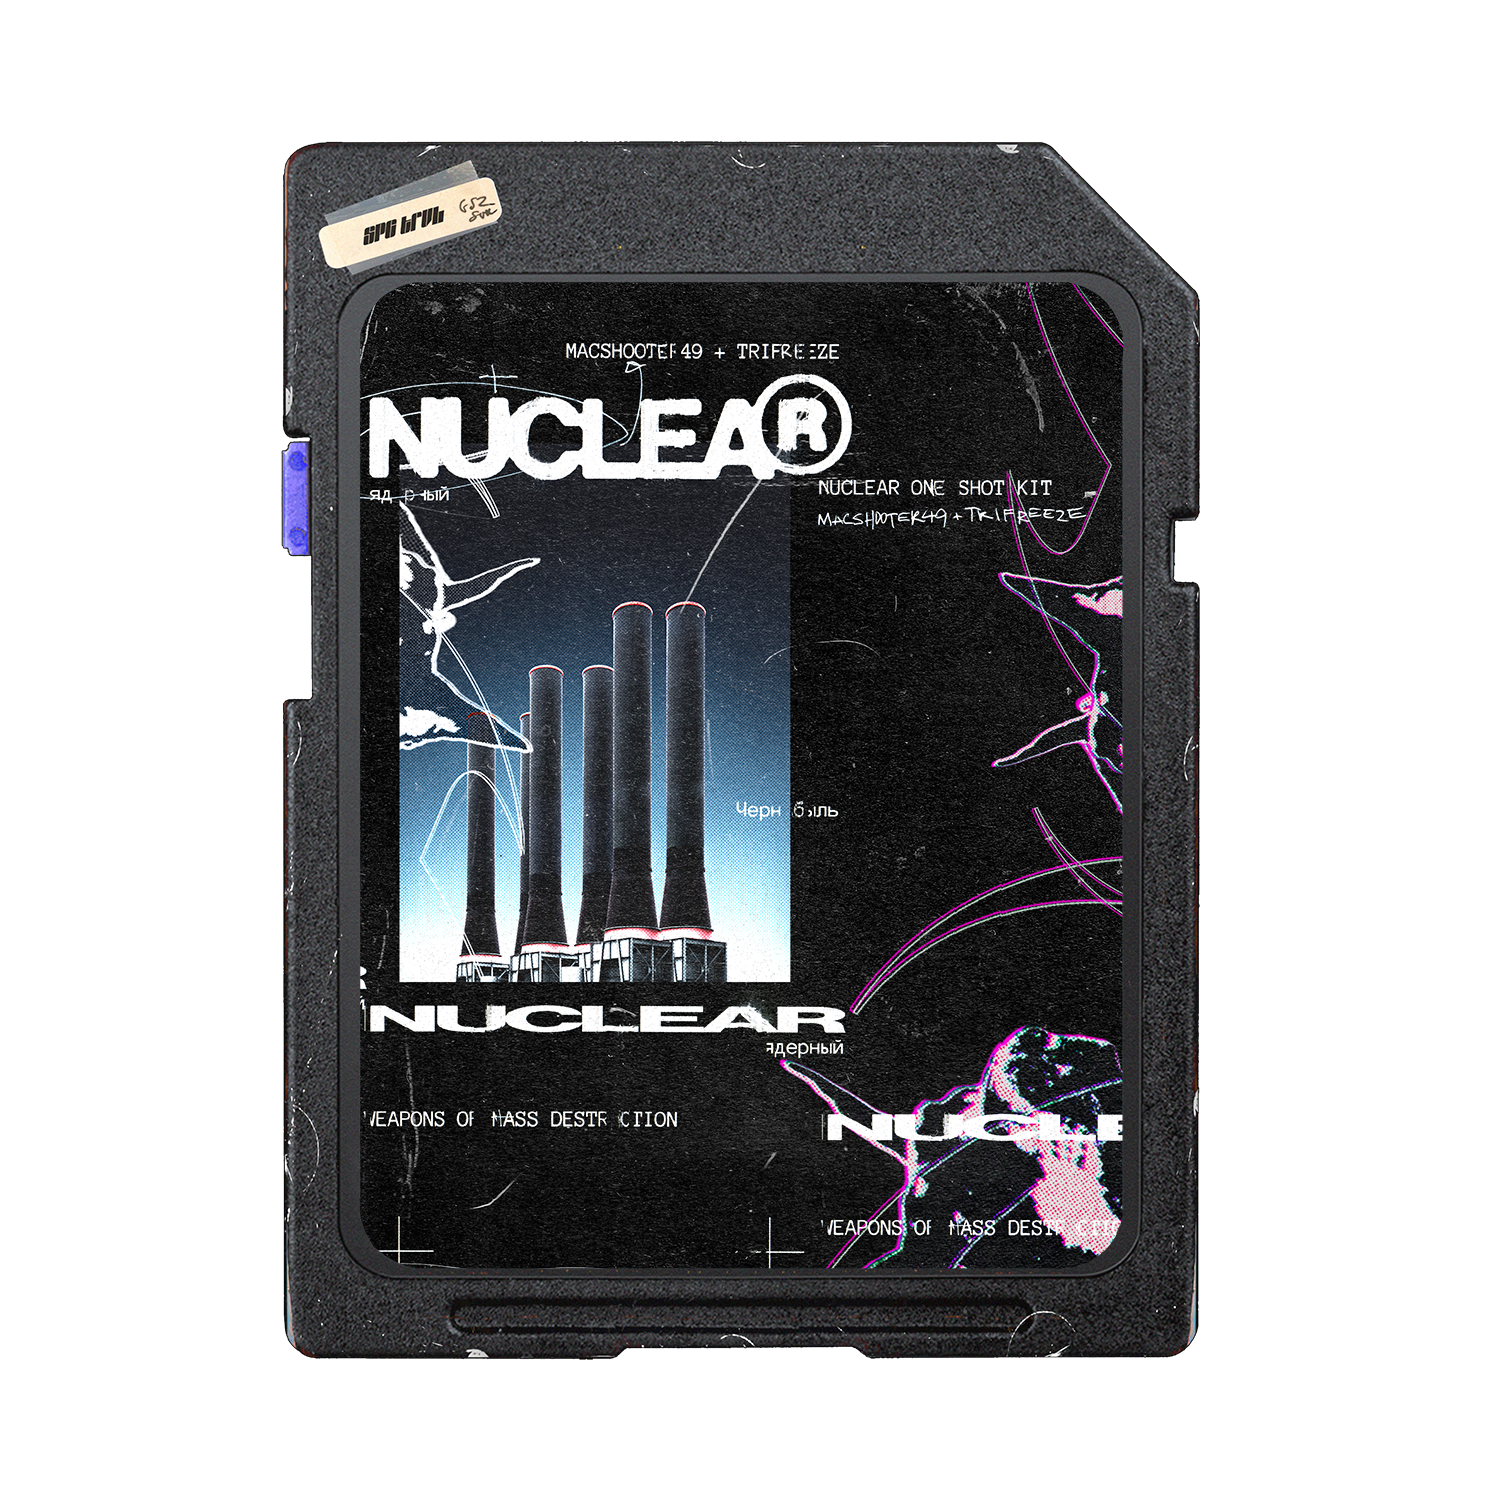 [FREE] Nuclear Vol. 1 Oneshot Kit Demo